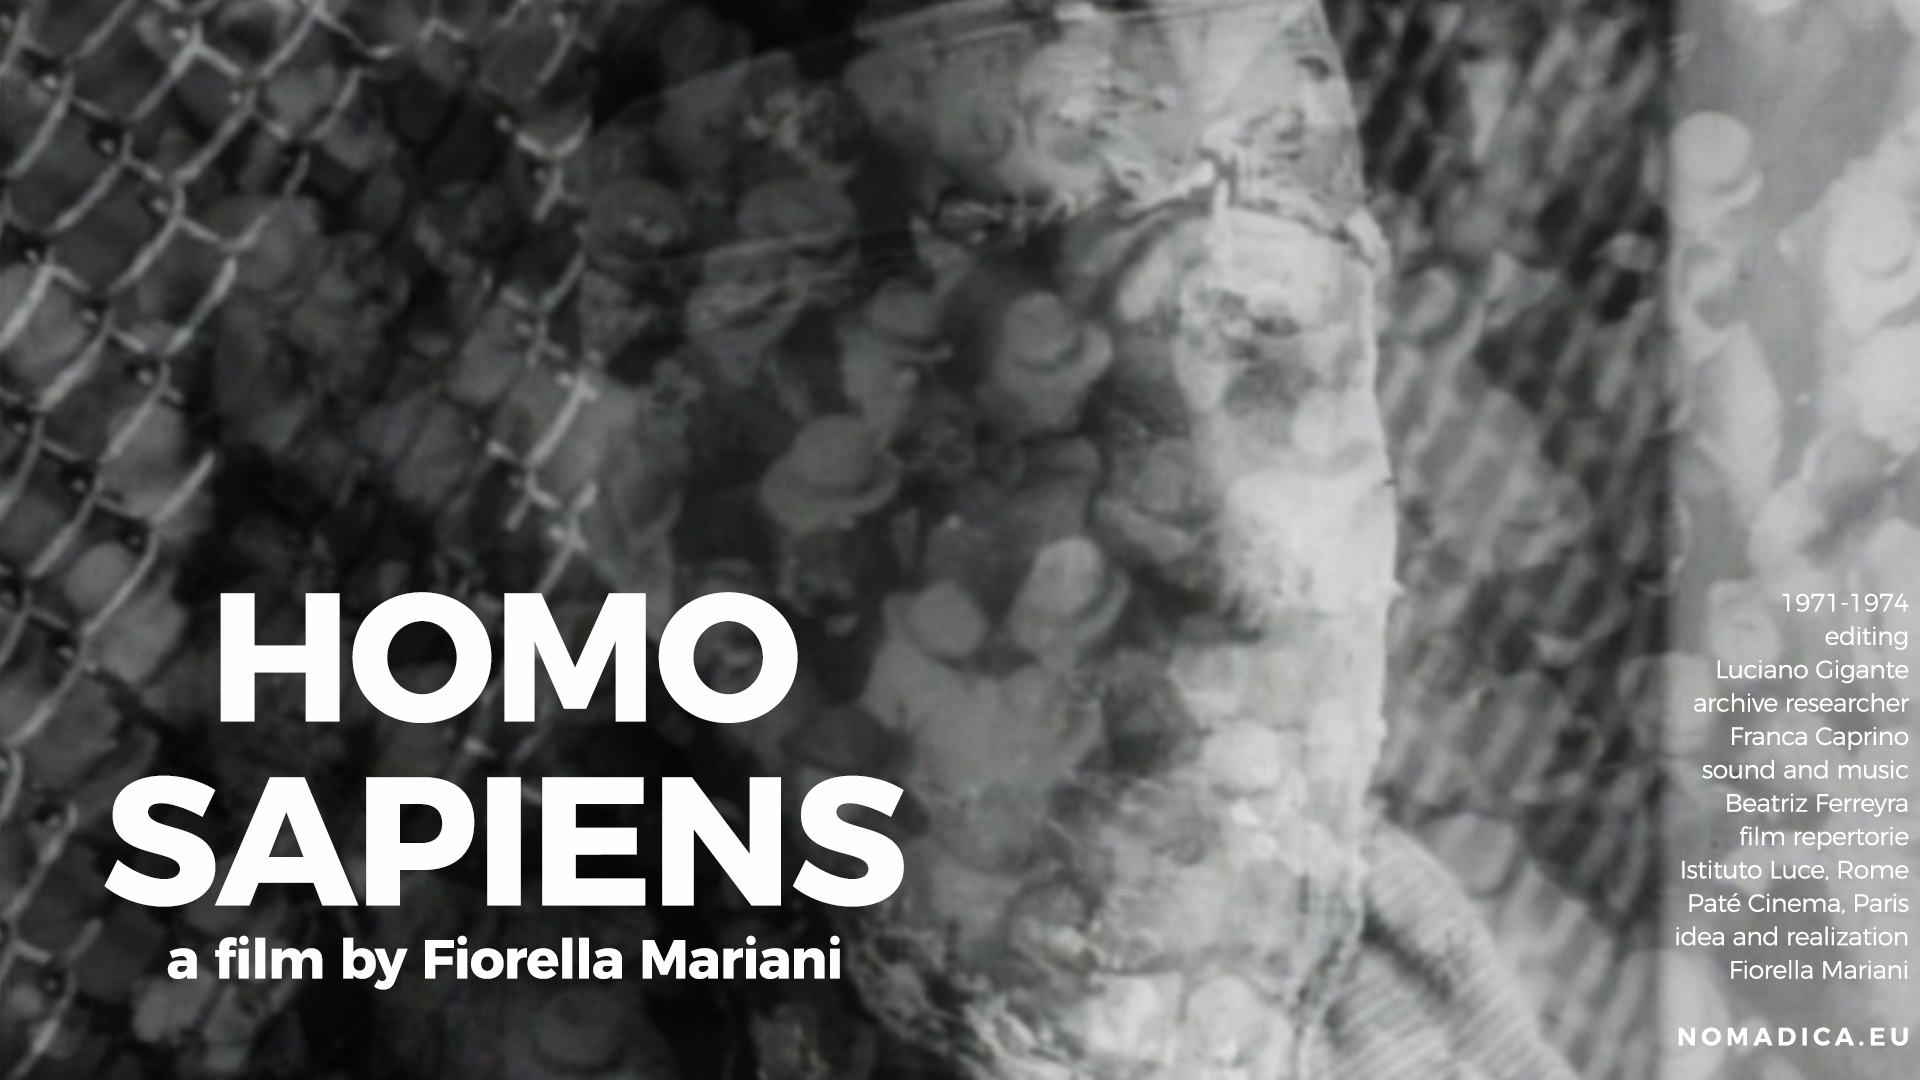 Homo sapiens, a film by Fiorella Mariani (open distribution)